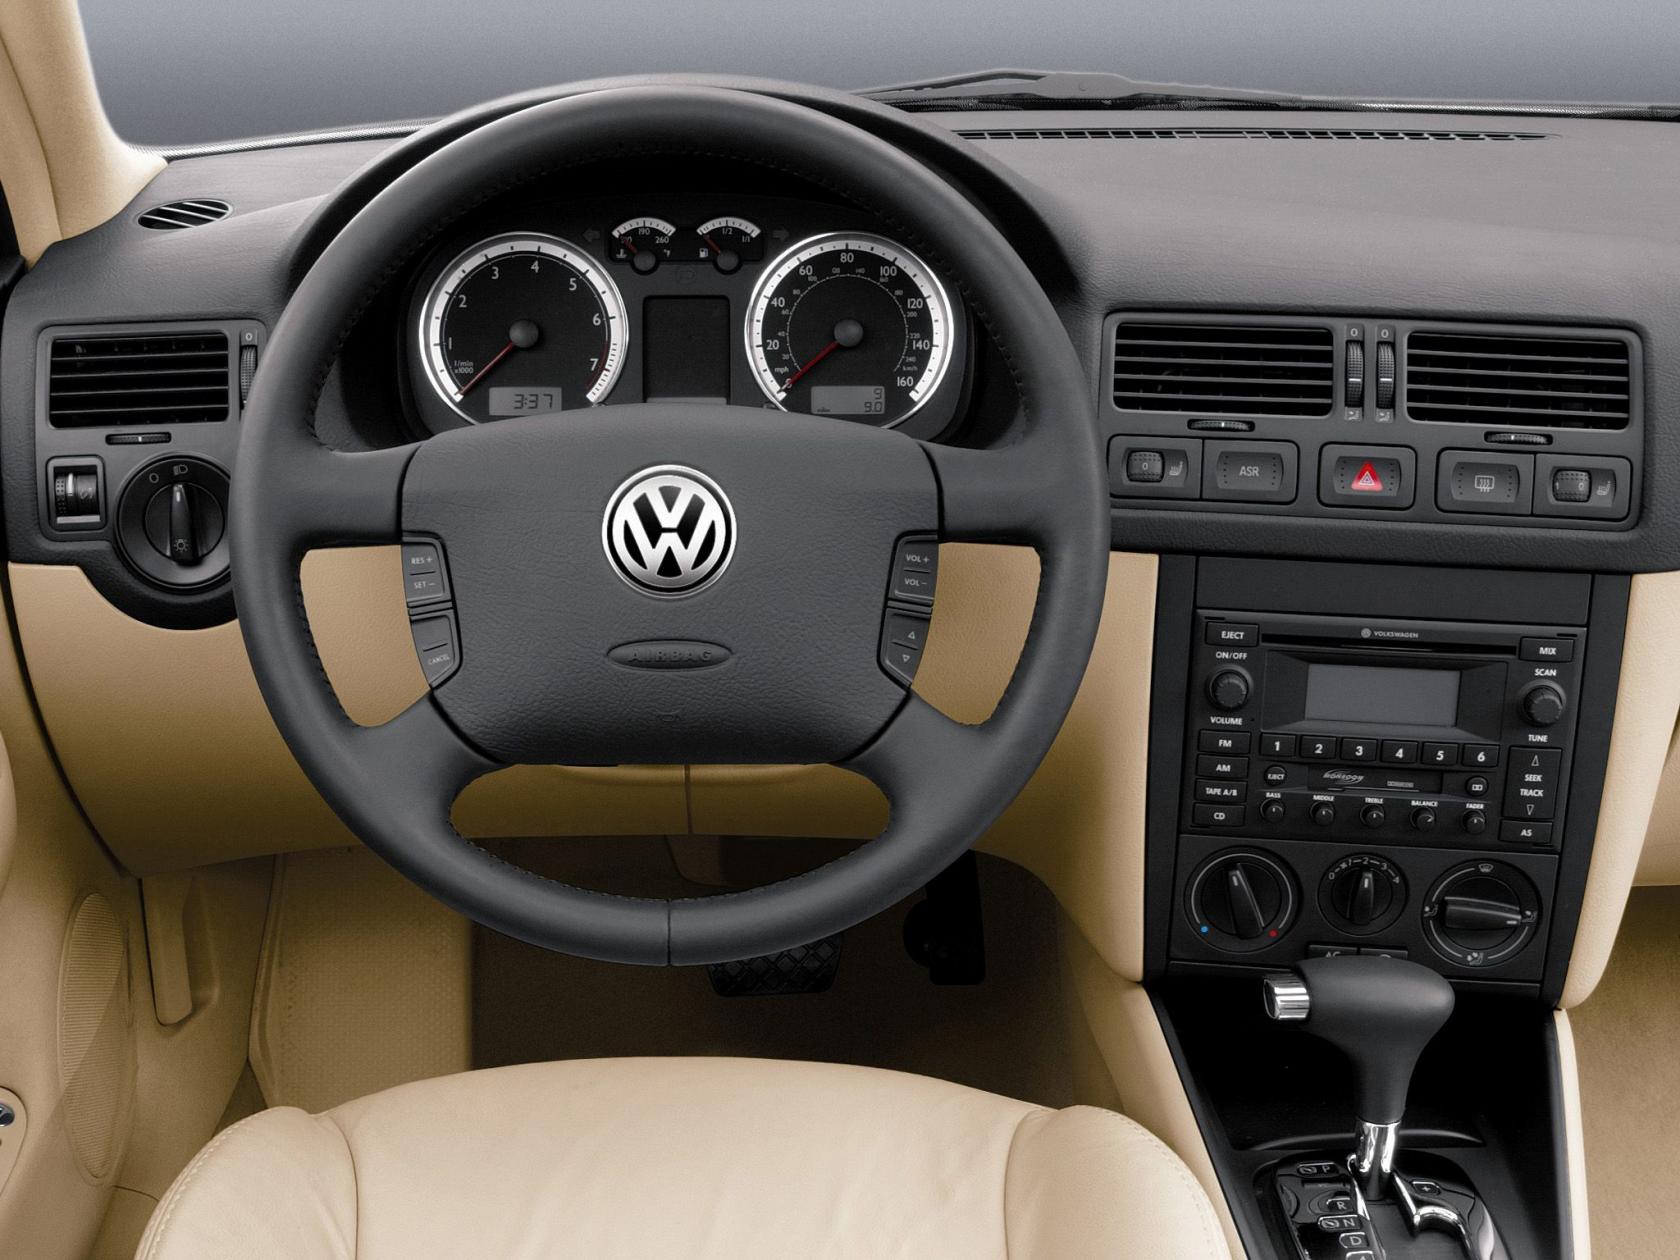 Volkswagen Golf 4 2001 Interior